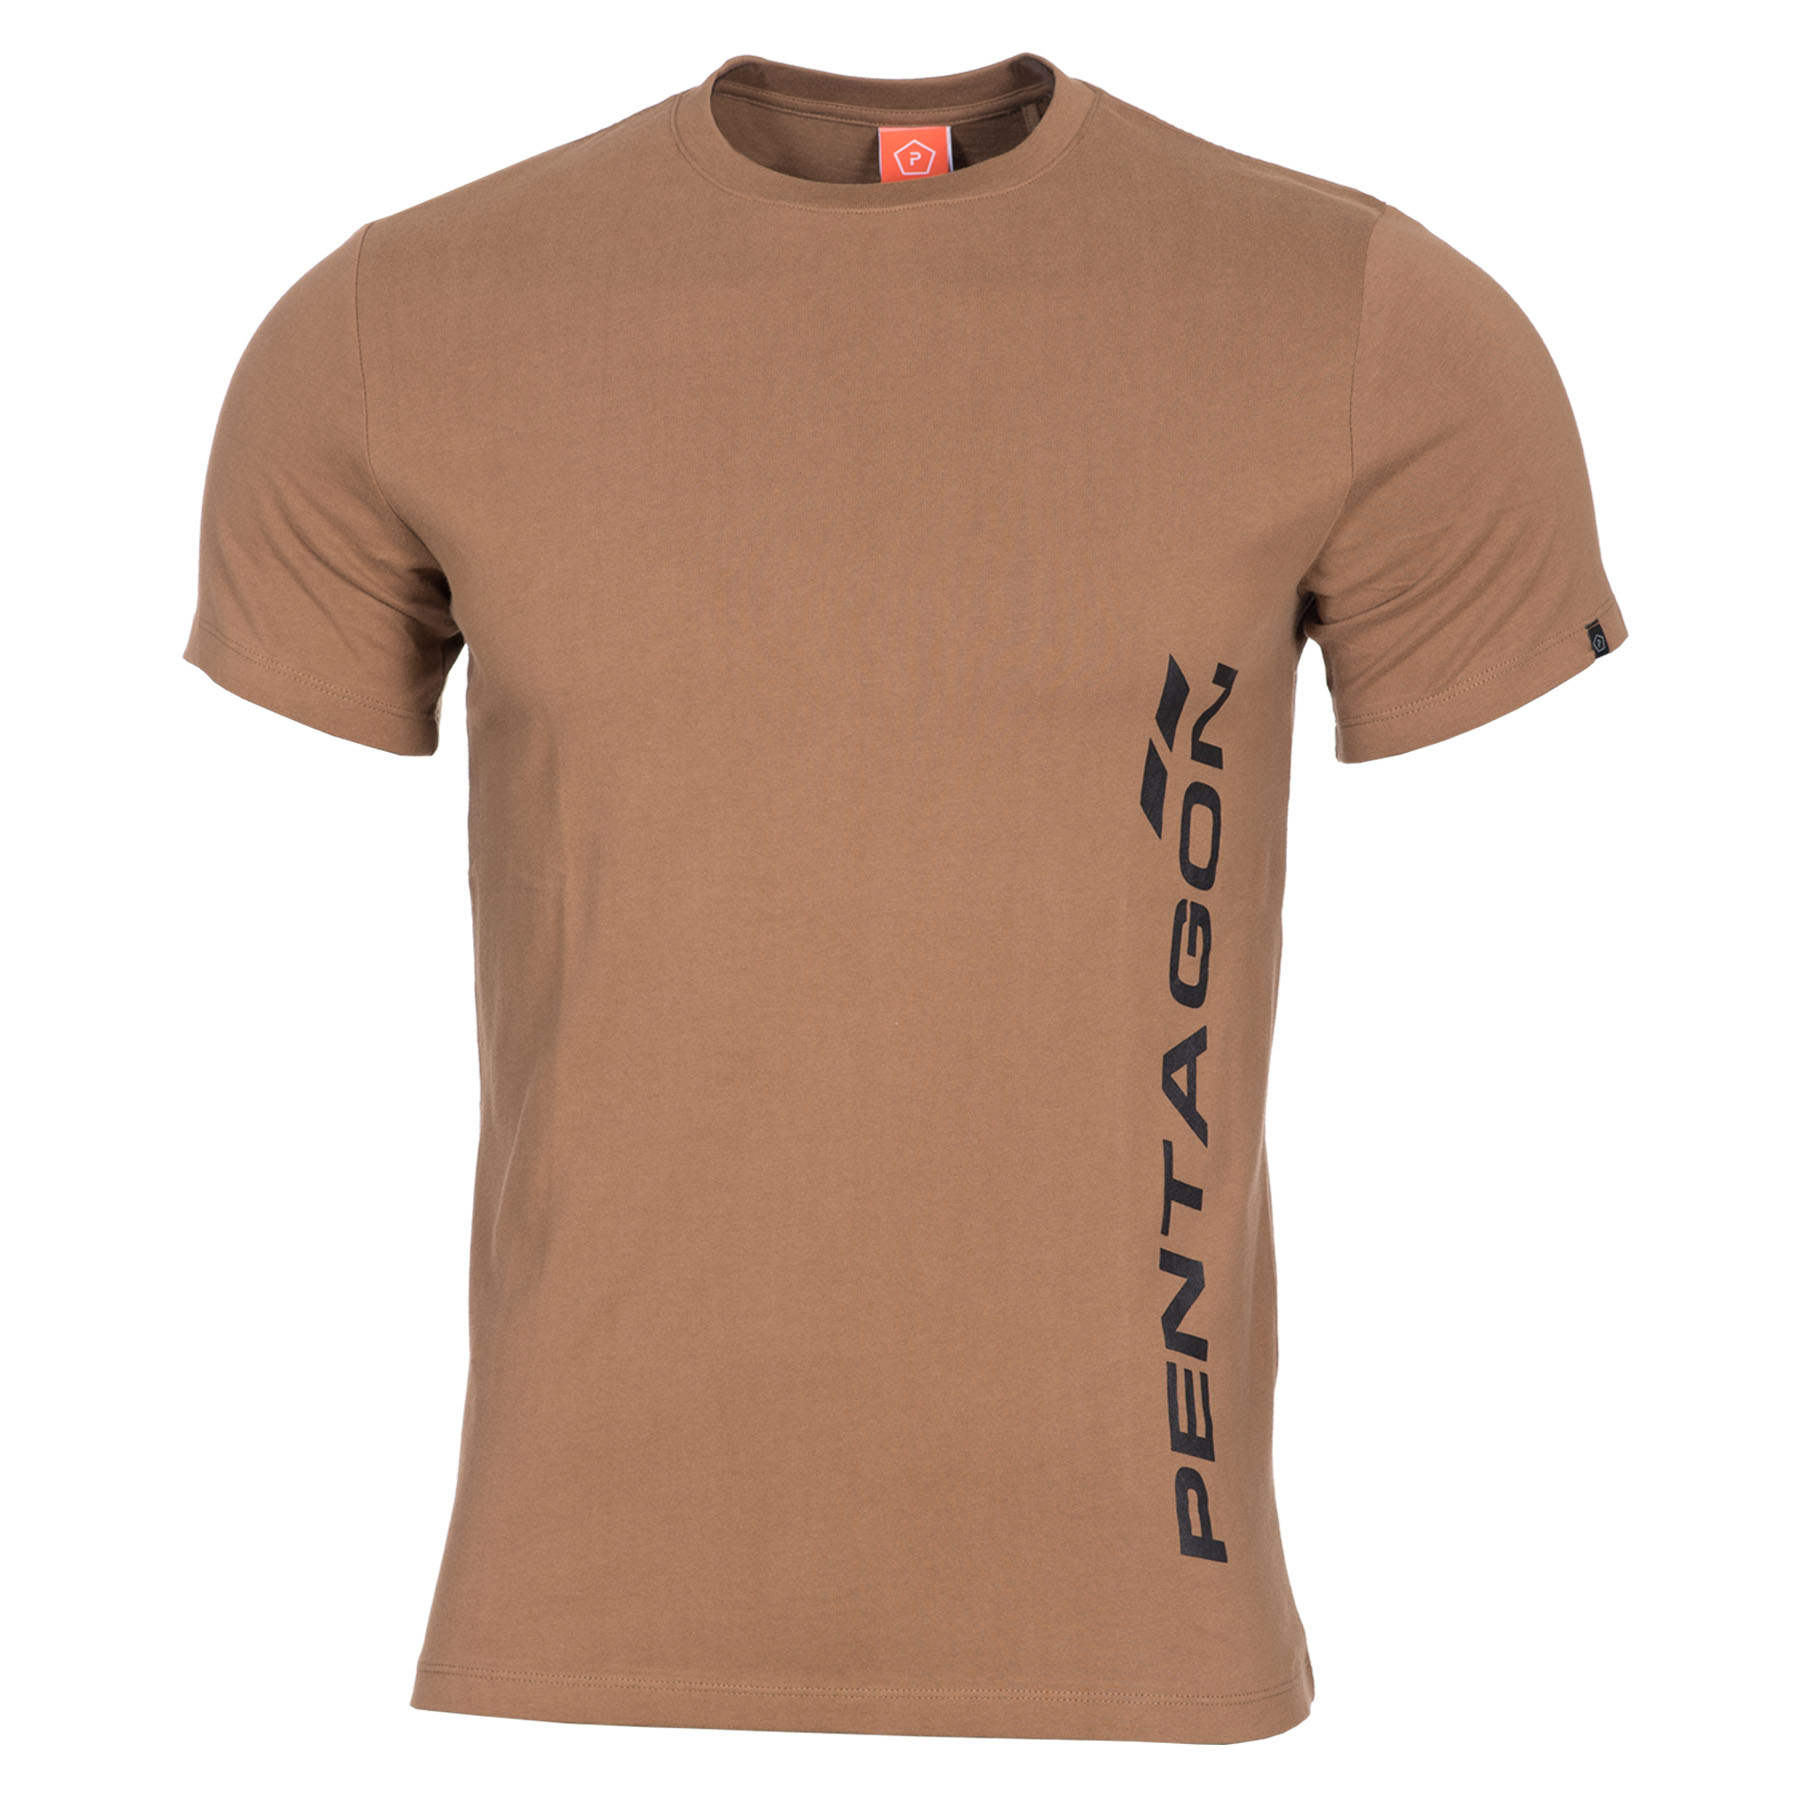 Pentagon Ageron T-Shirt Vertical Logo Gym Workout Marine Mens Top Pacific Blue 